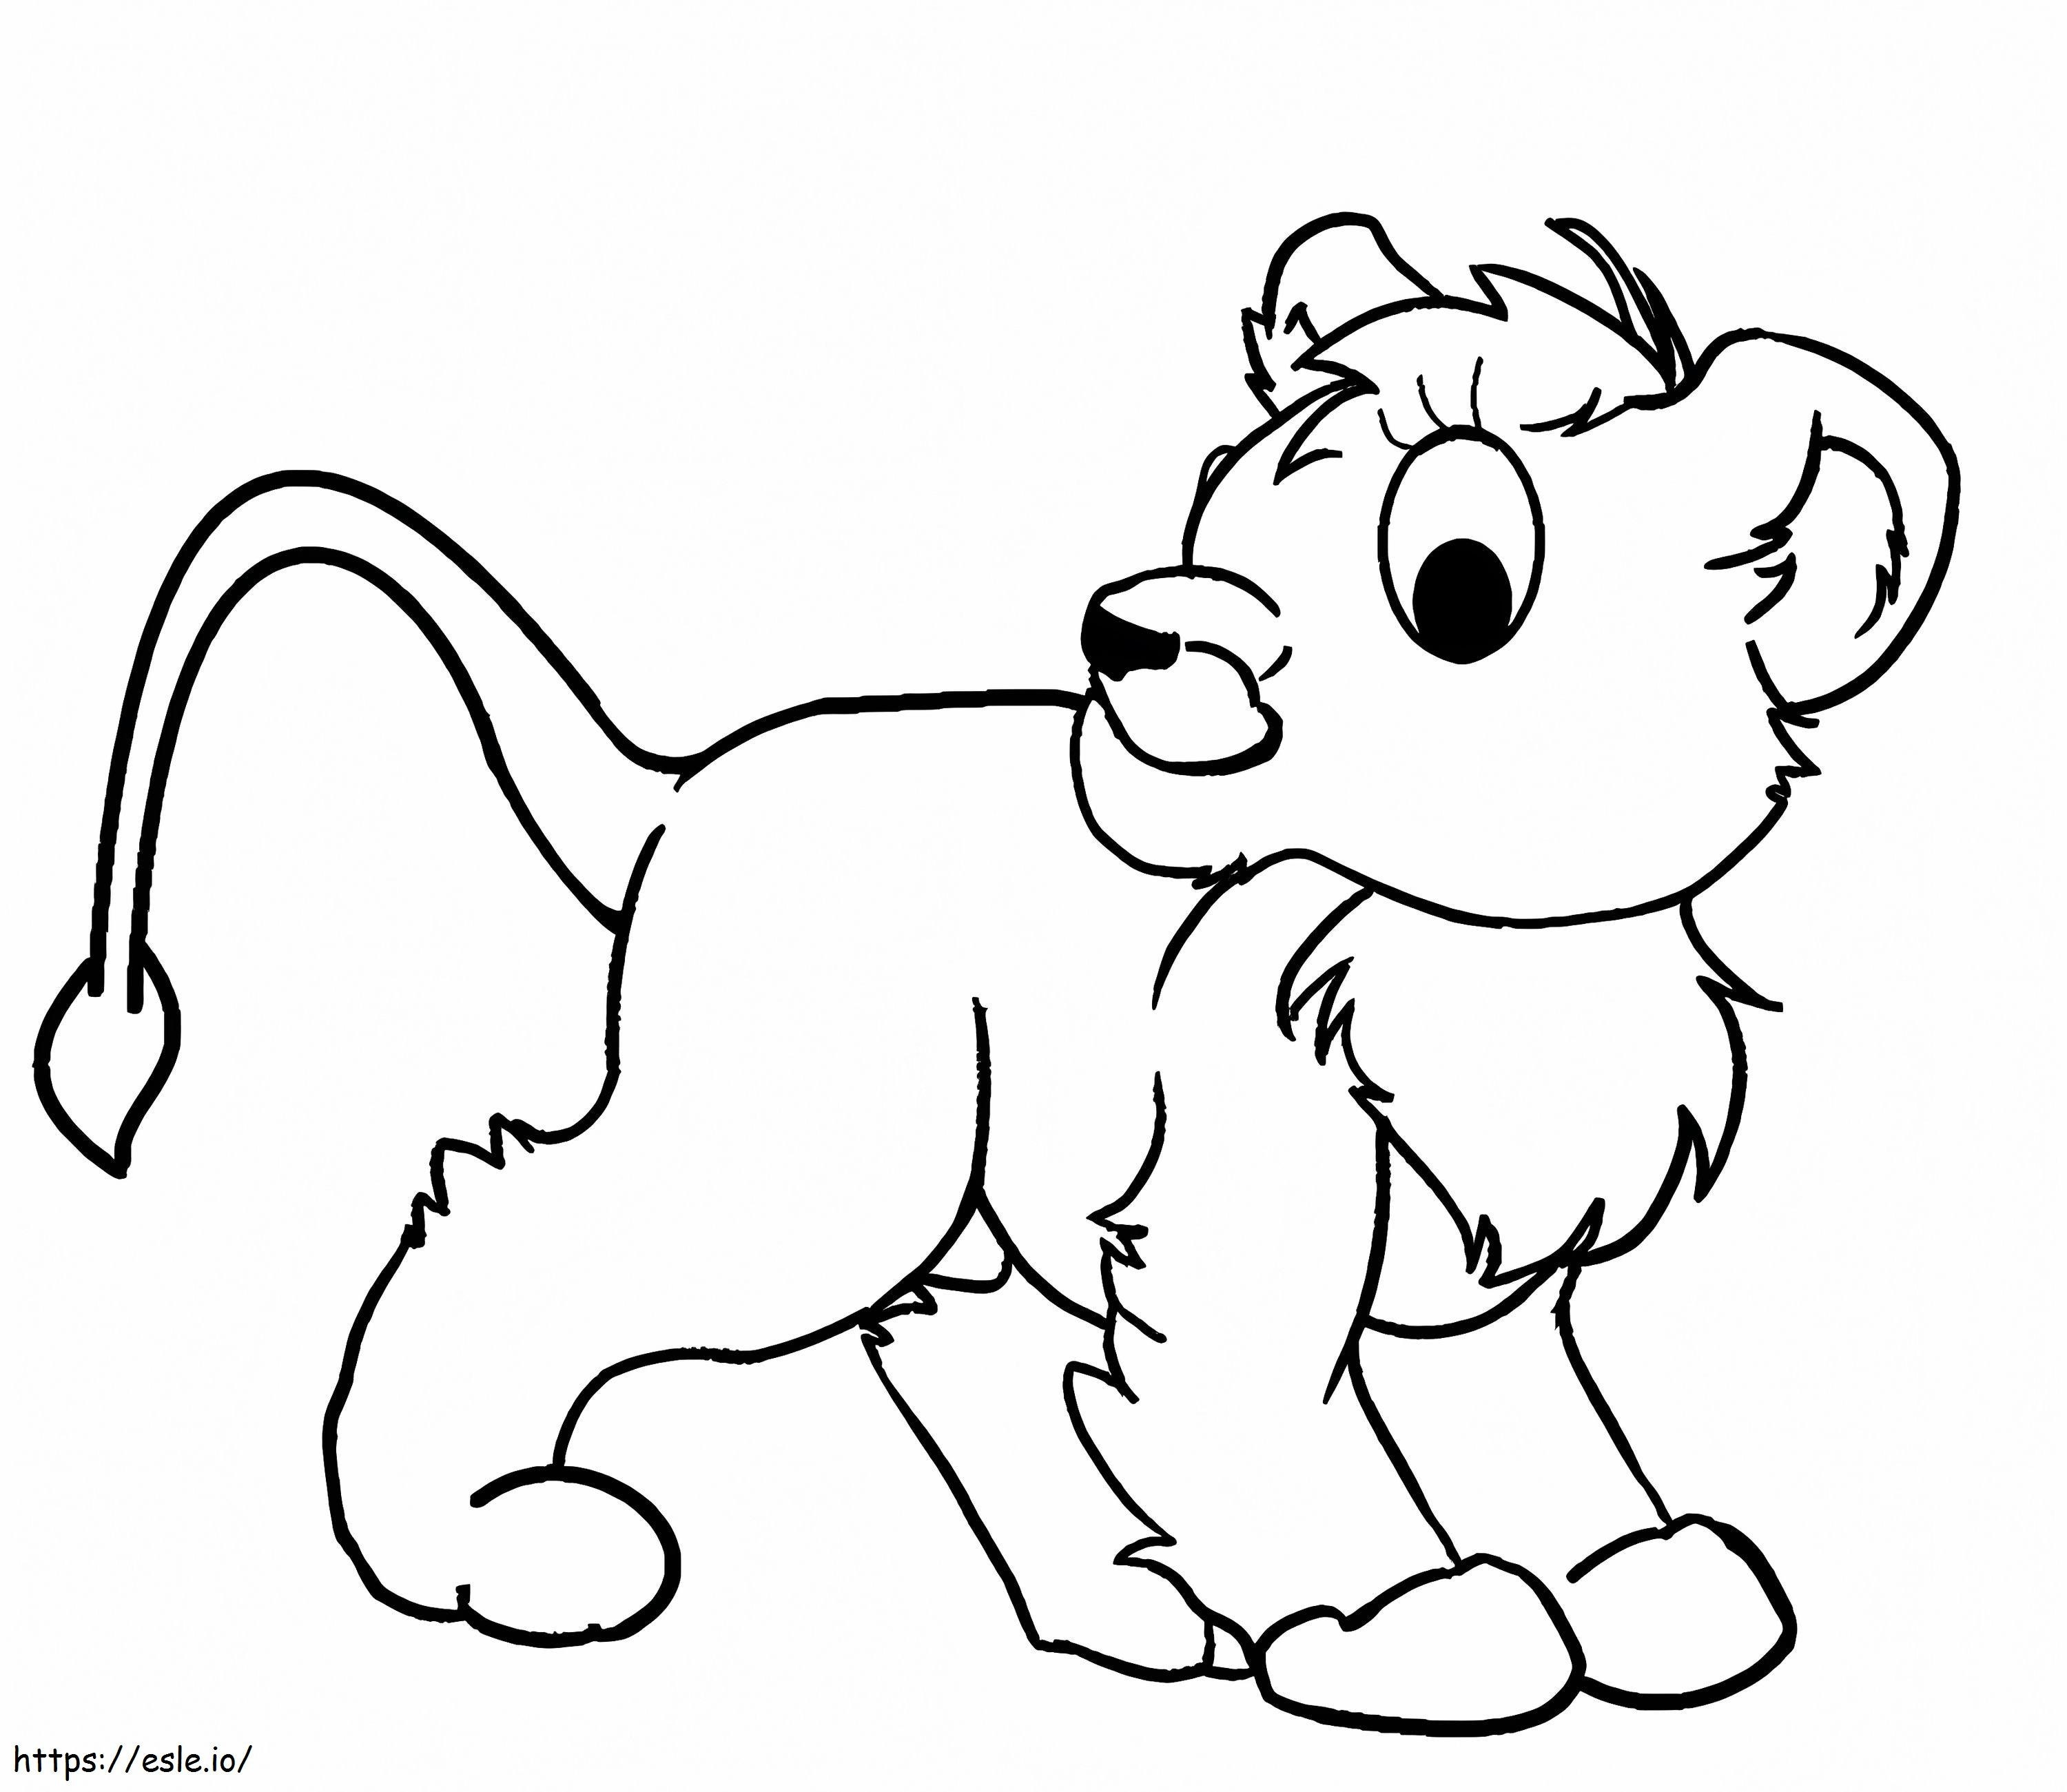 Leão Webkinz para colorir